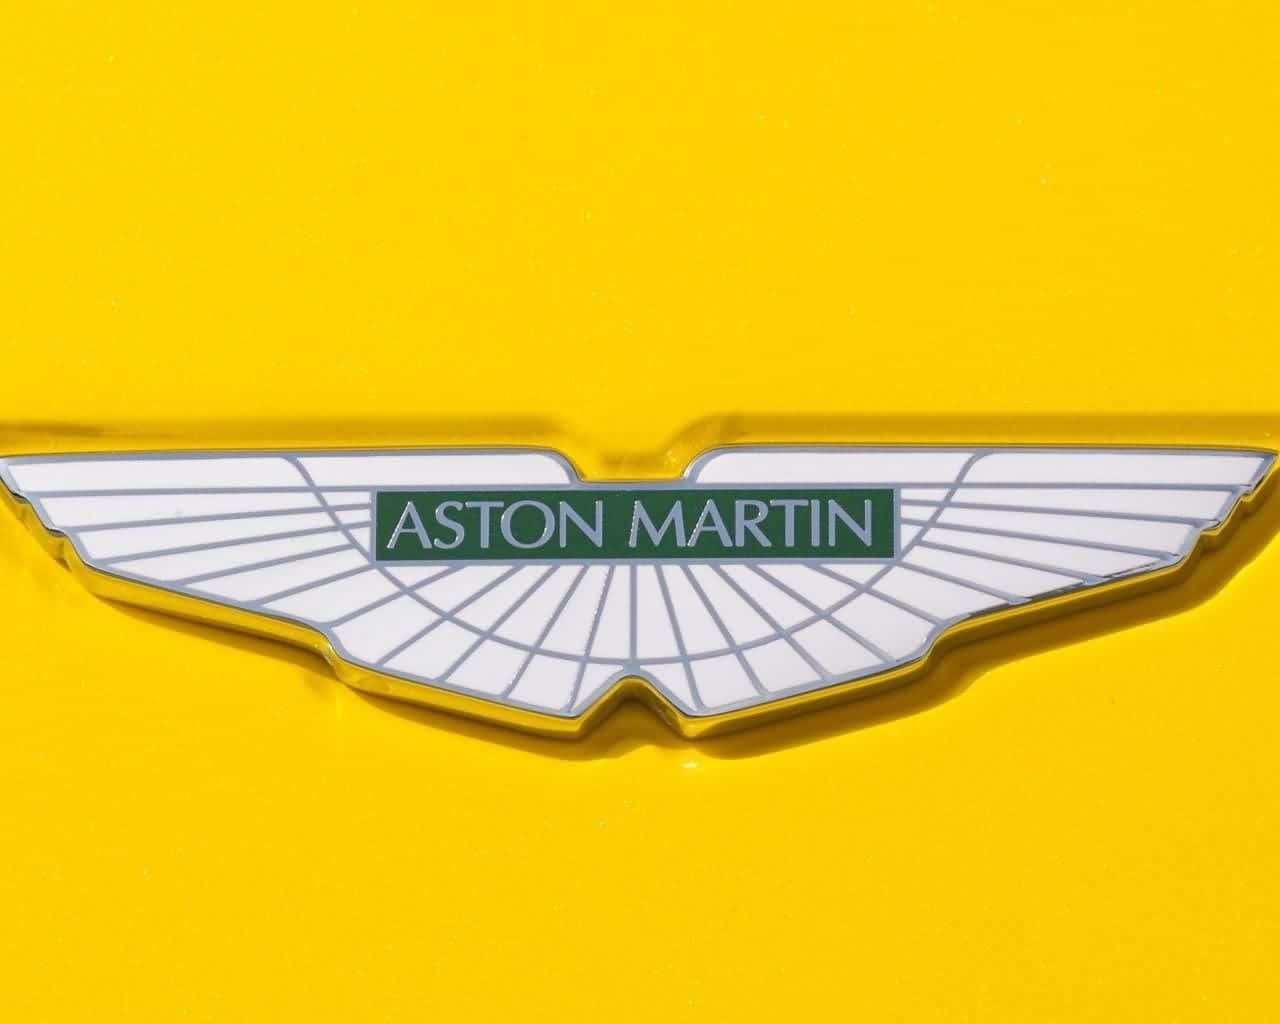 Astonmartin Emblem På En Gul Bil.